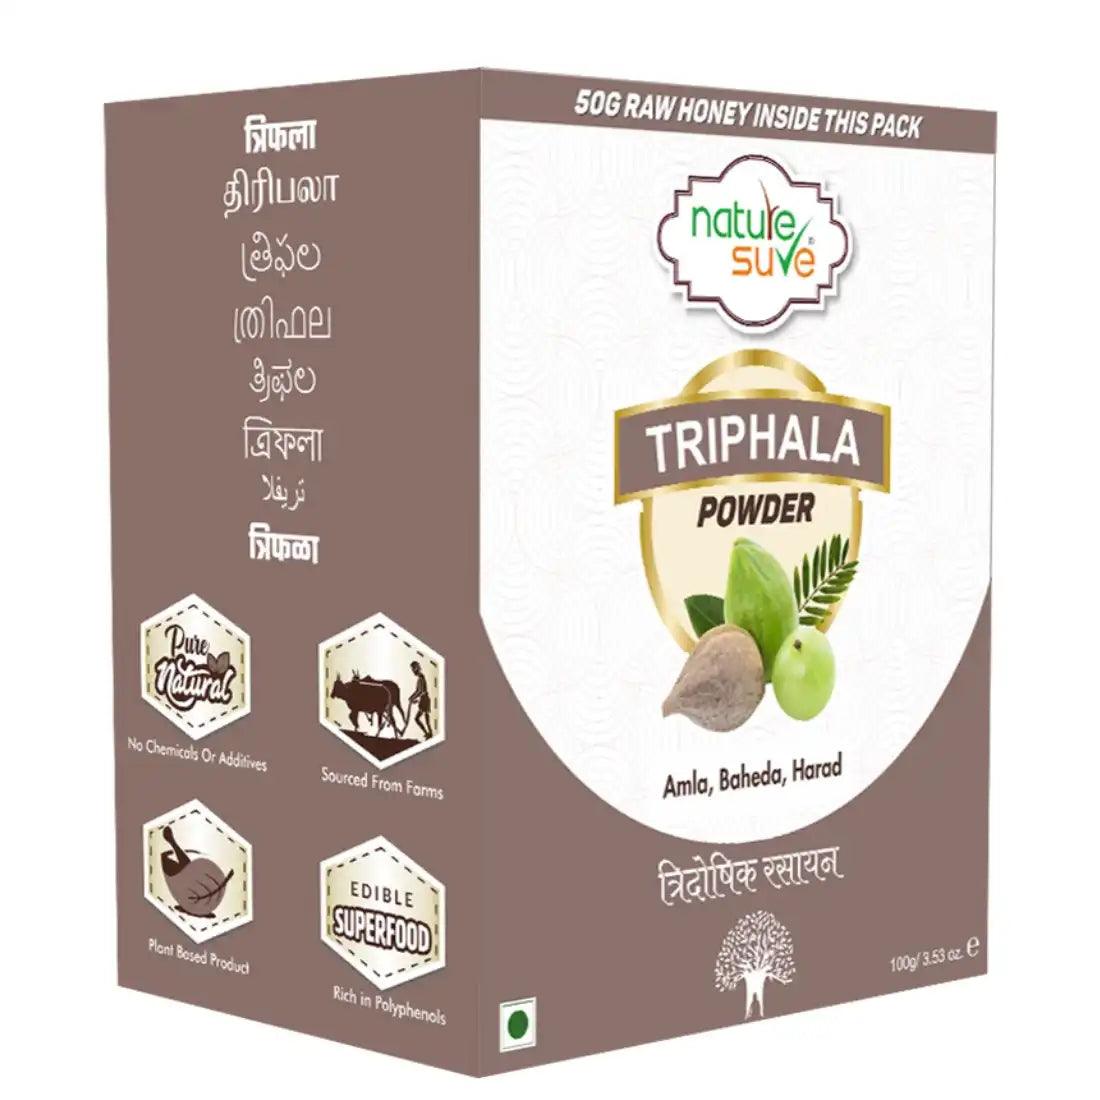 Nature Sure Triphala Powder For Eyes, Skin, Hair and Detox - 100g